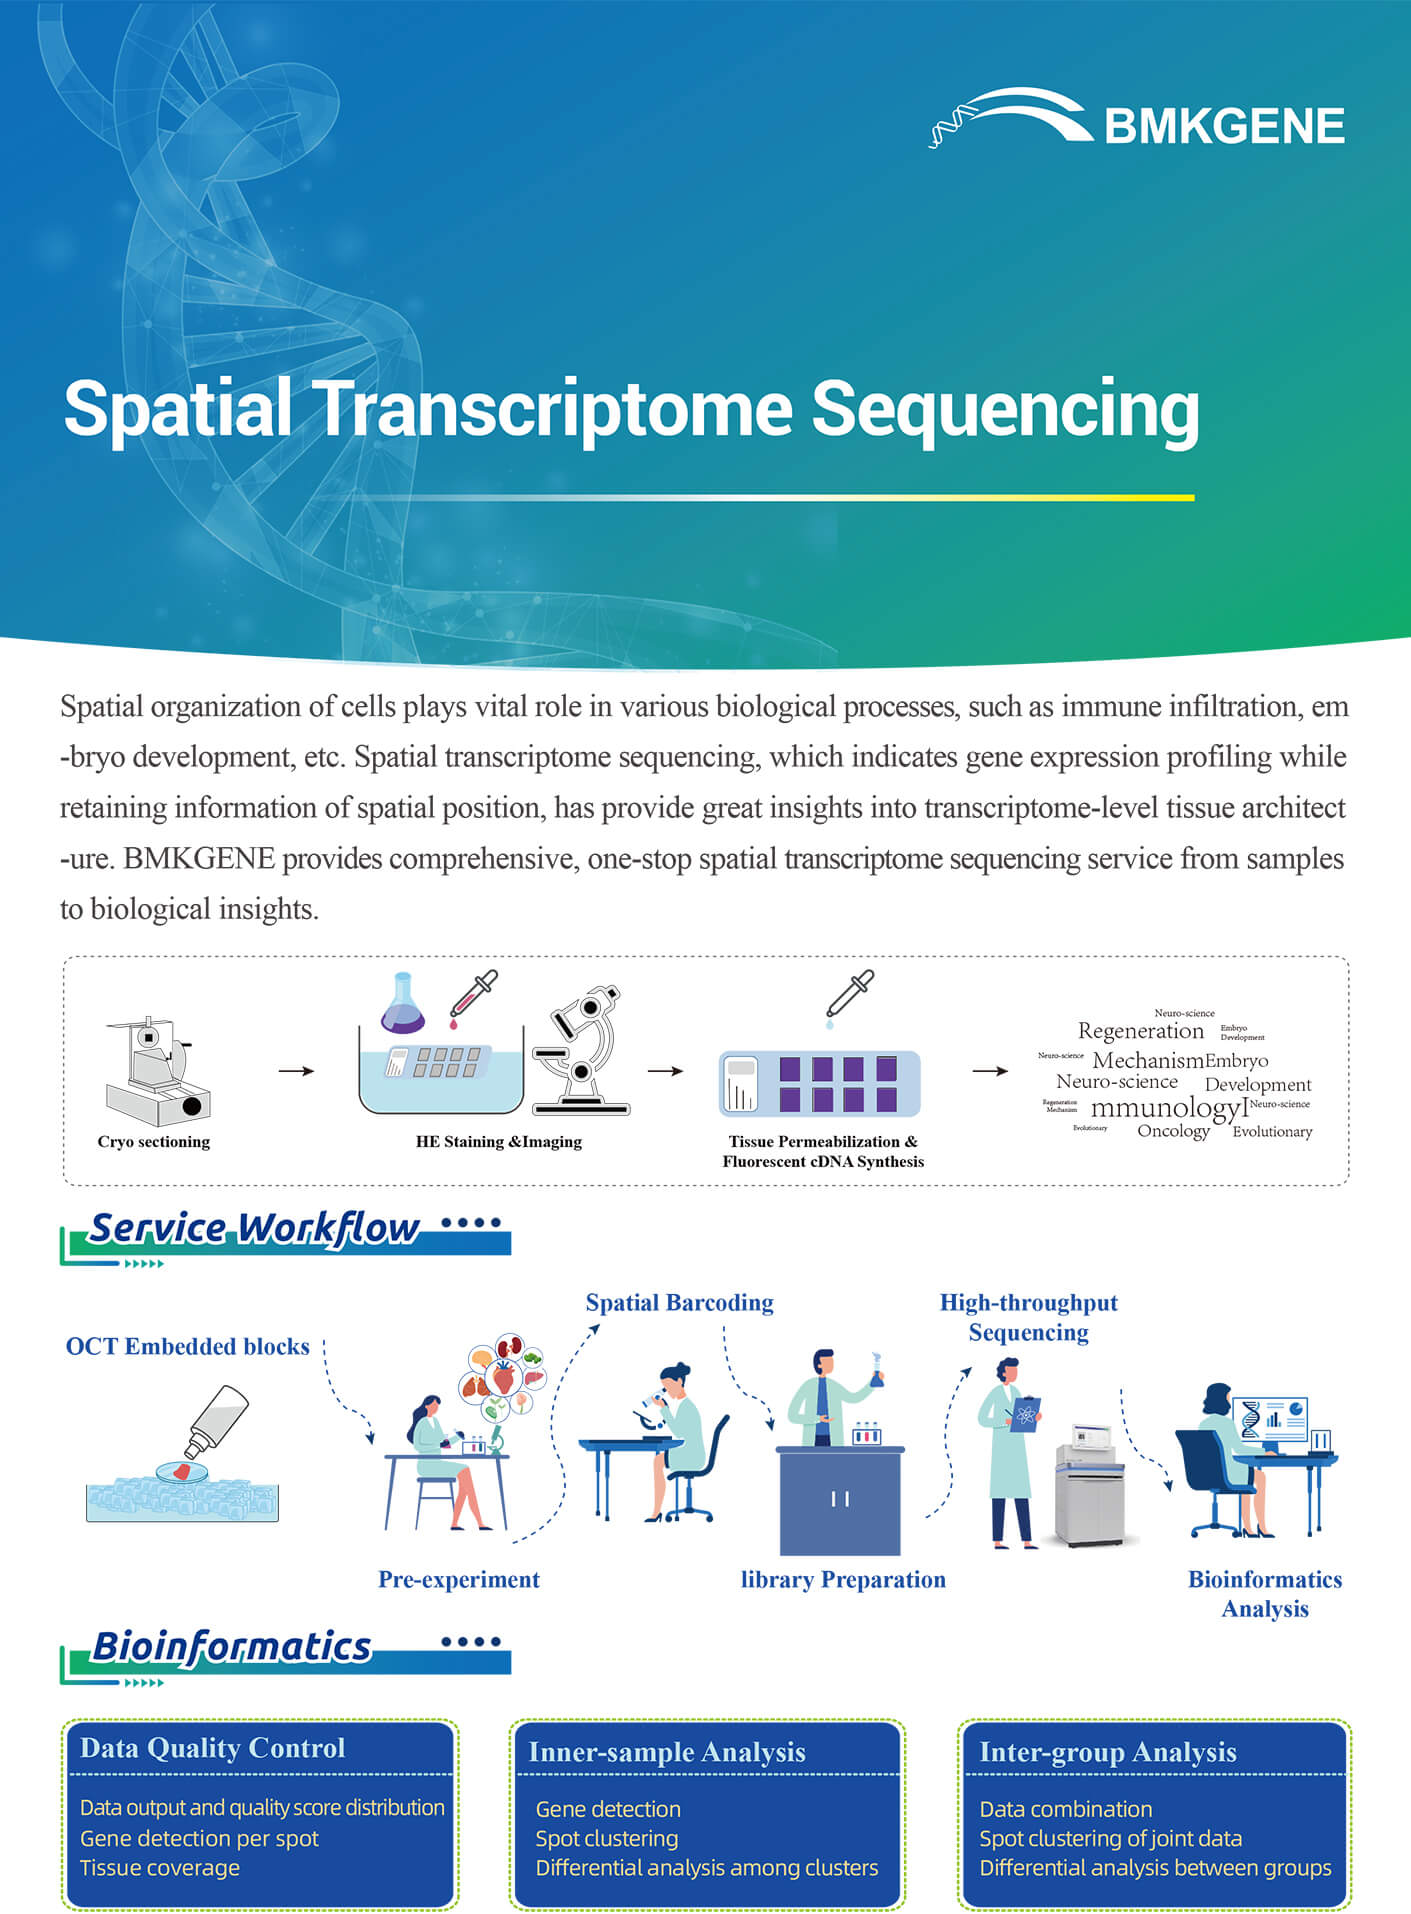 http://www.bmkgene.com/uploads/Spatial-Transcriptome-Sequencing-10X-BMKGENE-2311.pdf